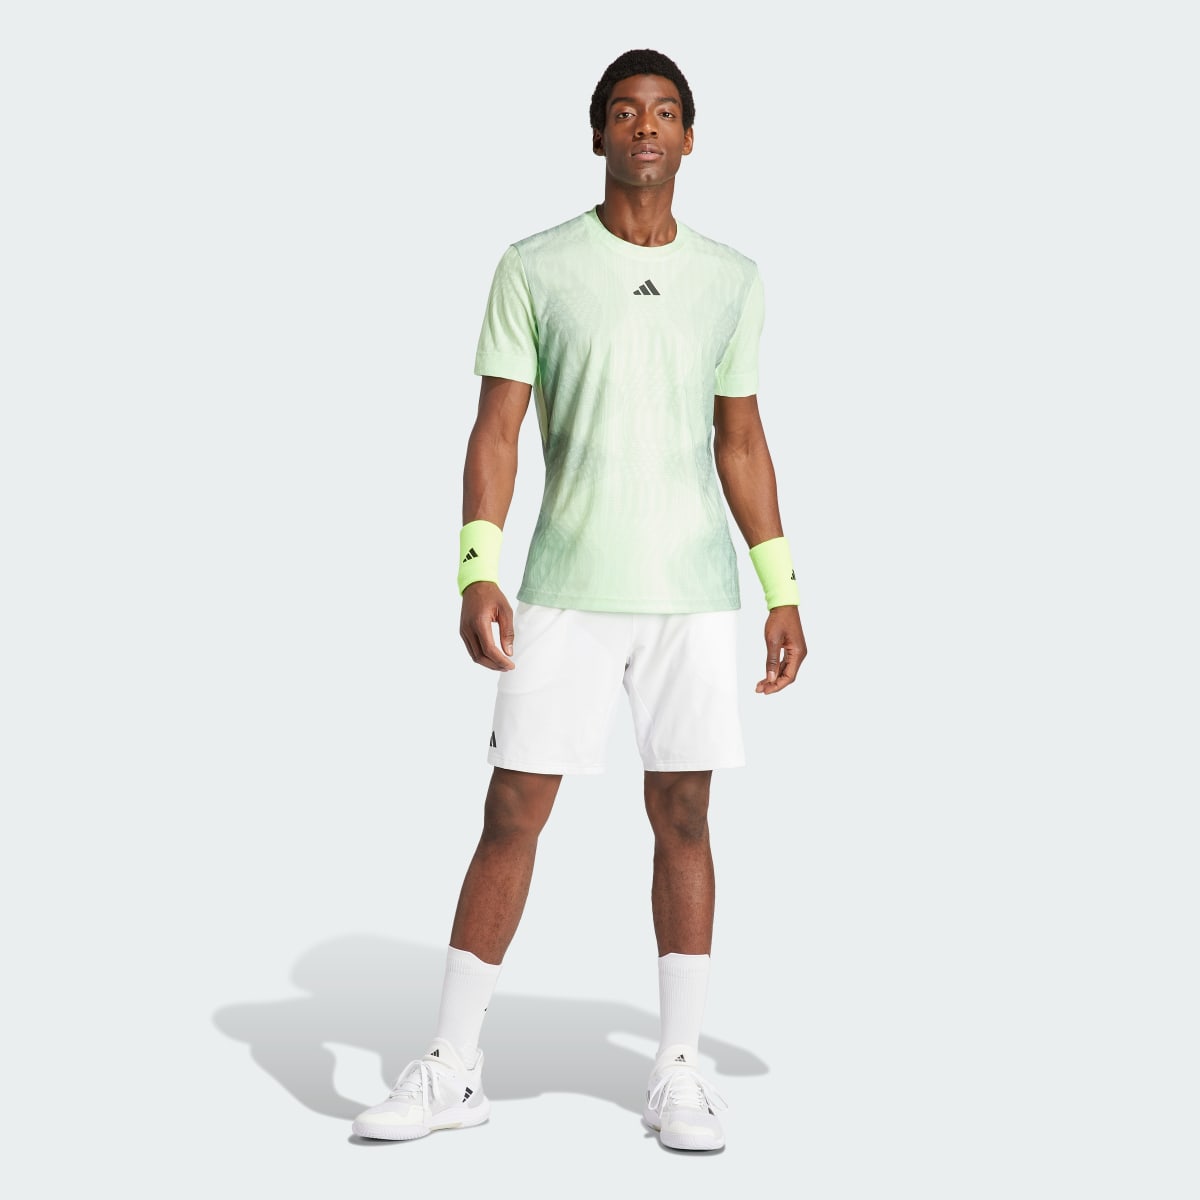 Adidas Tennis Airchill Pro FreeLift T-Shirt. 6